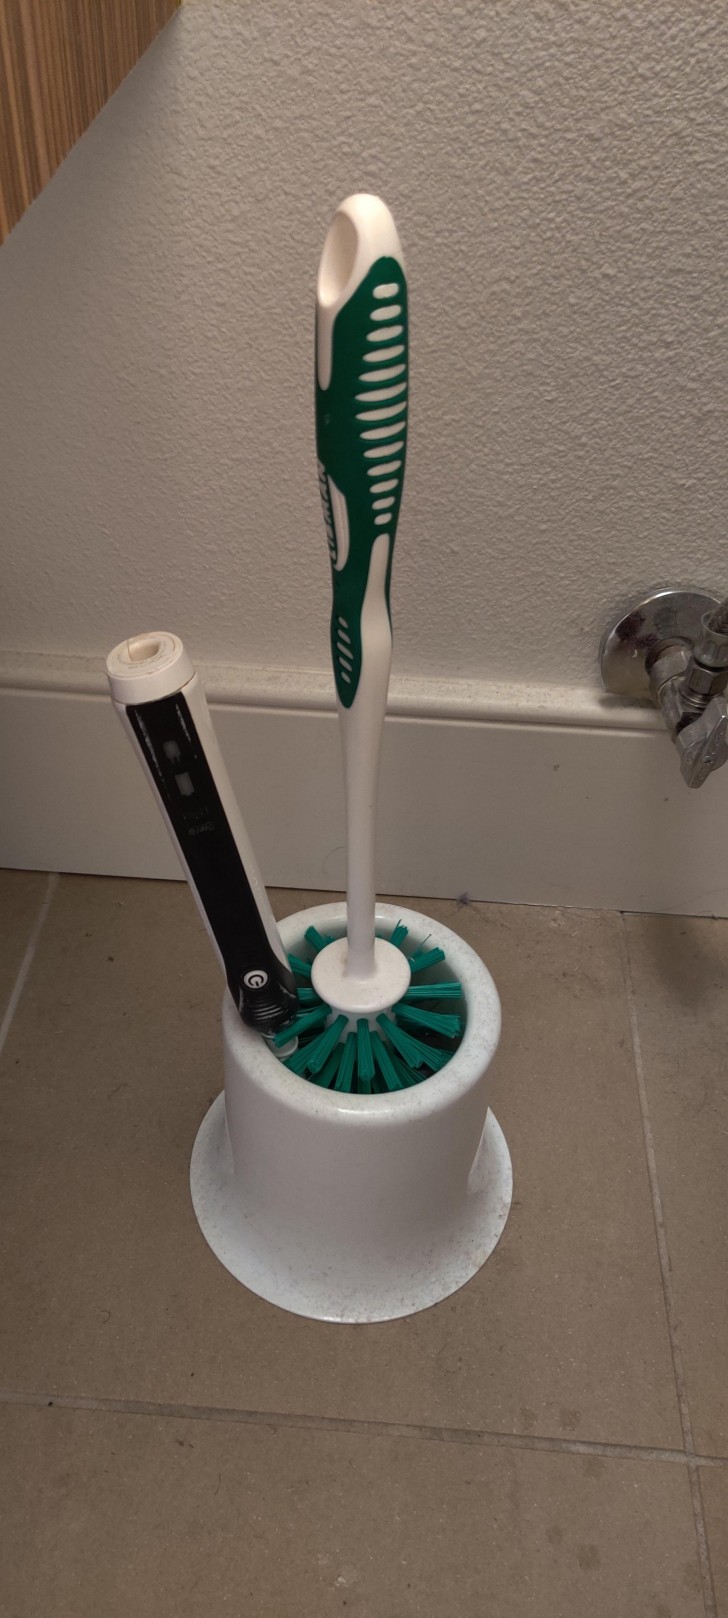 12. De tandenborstel in de toiletborstel...